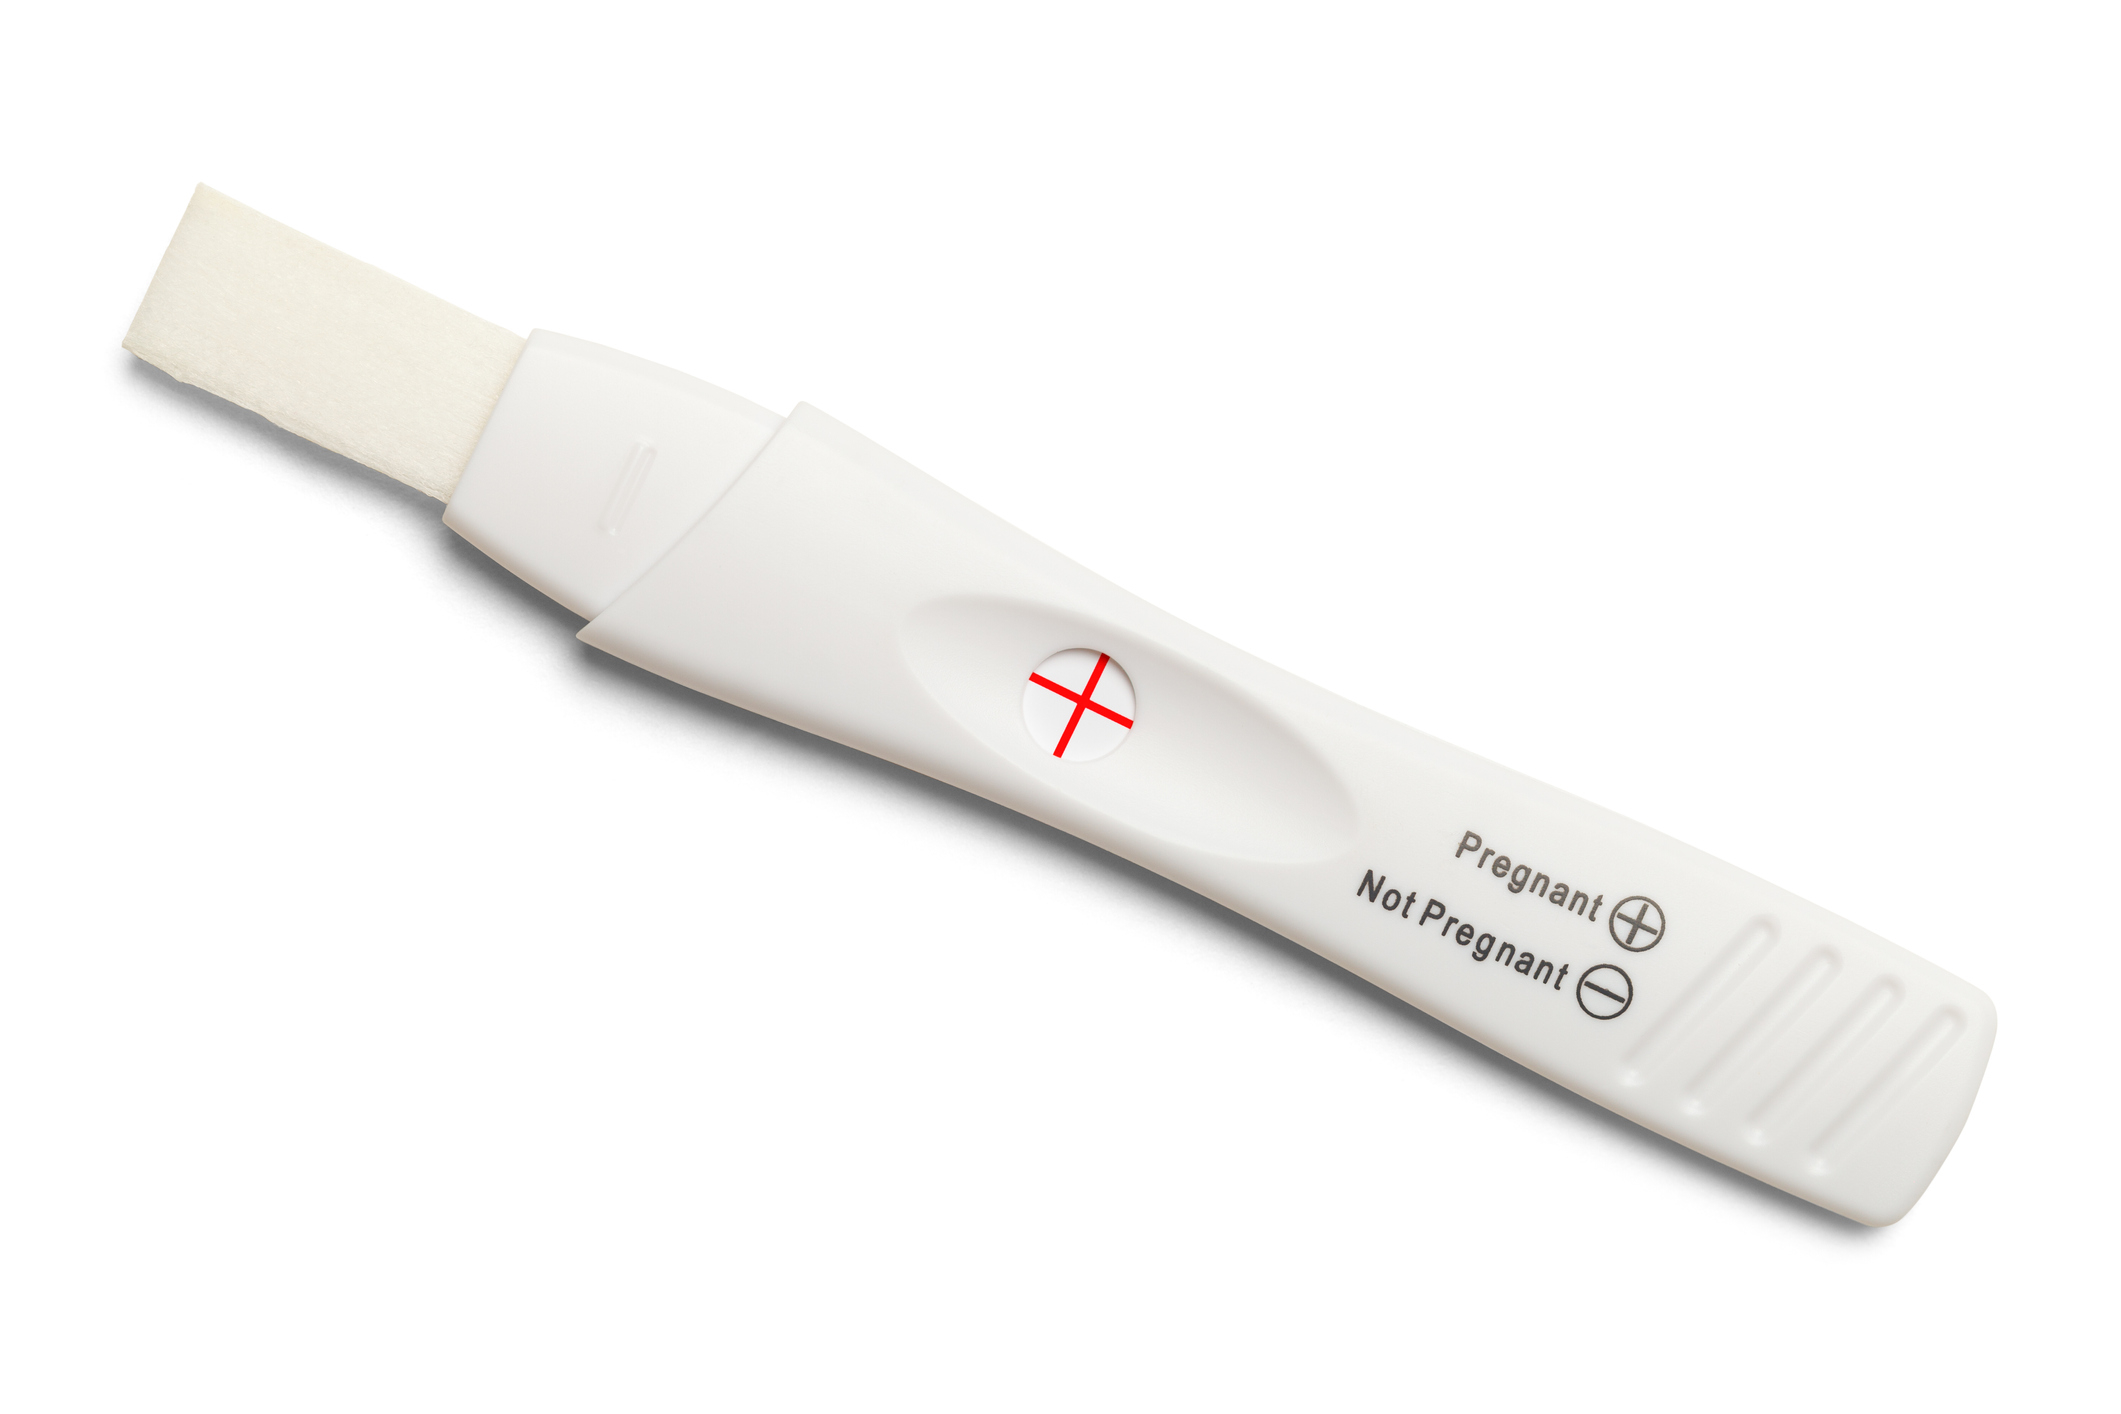 A positive pregnancy test